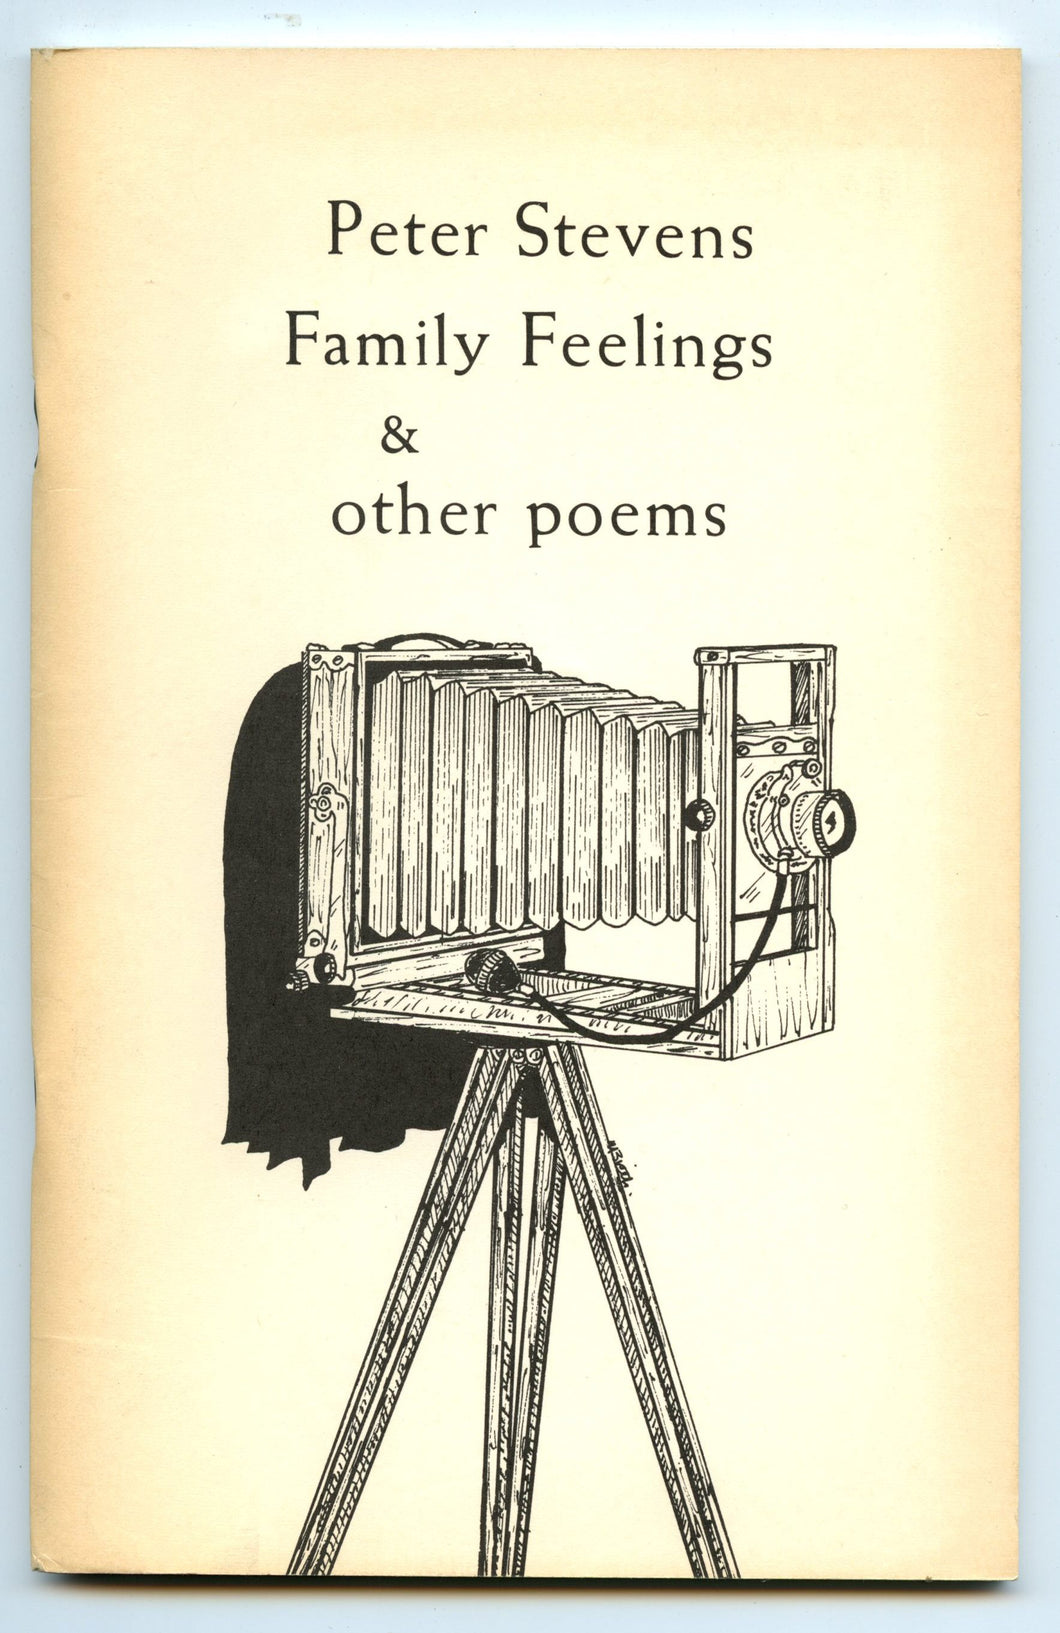 Family Feelings & other poems